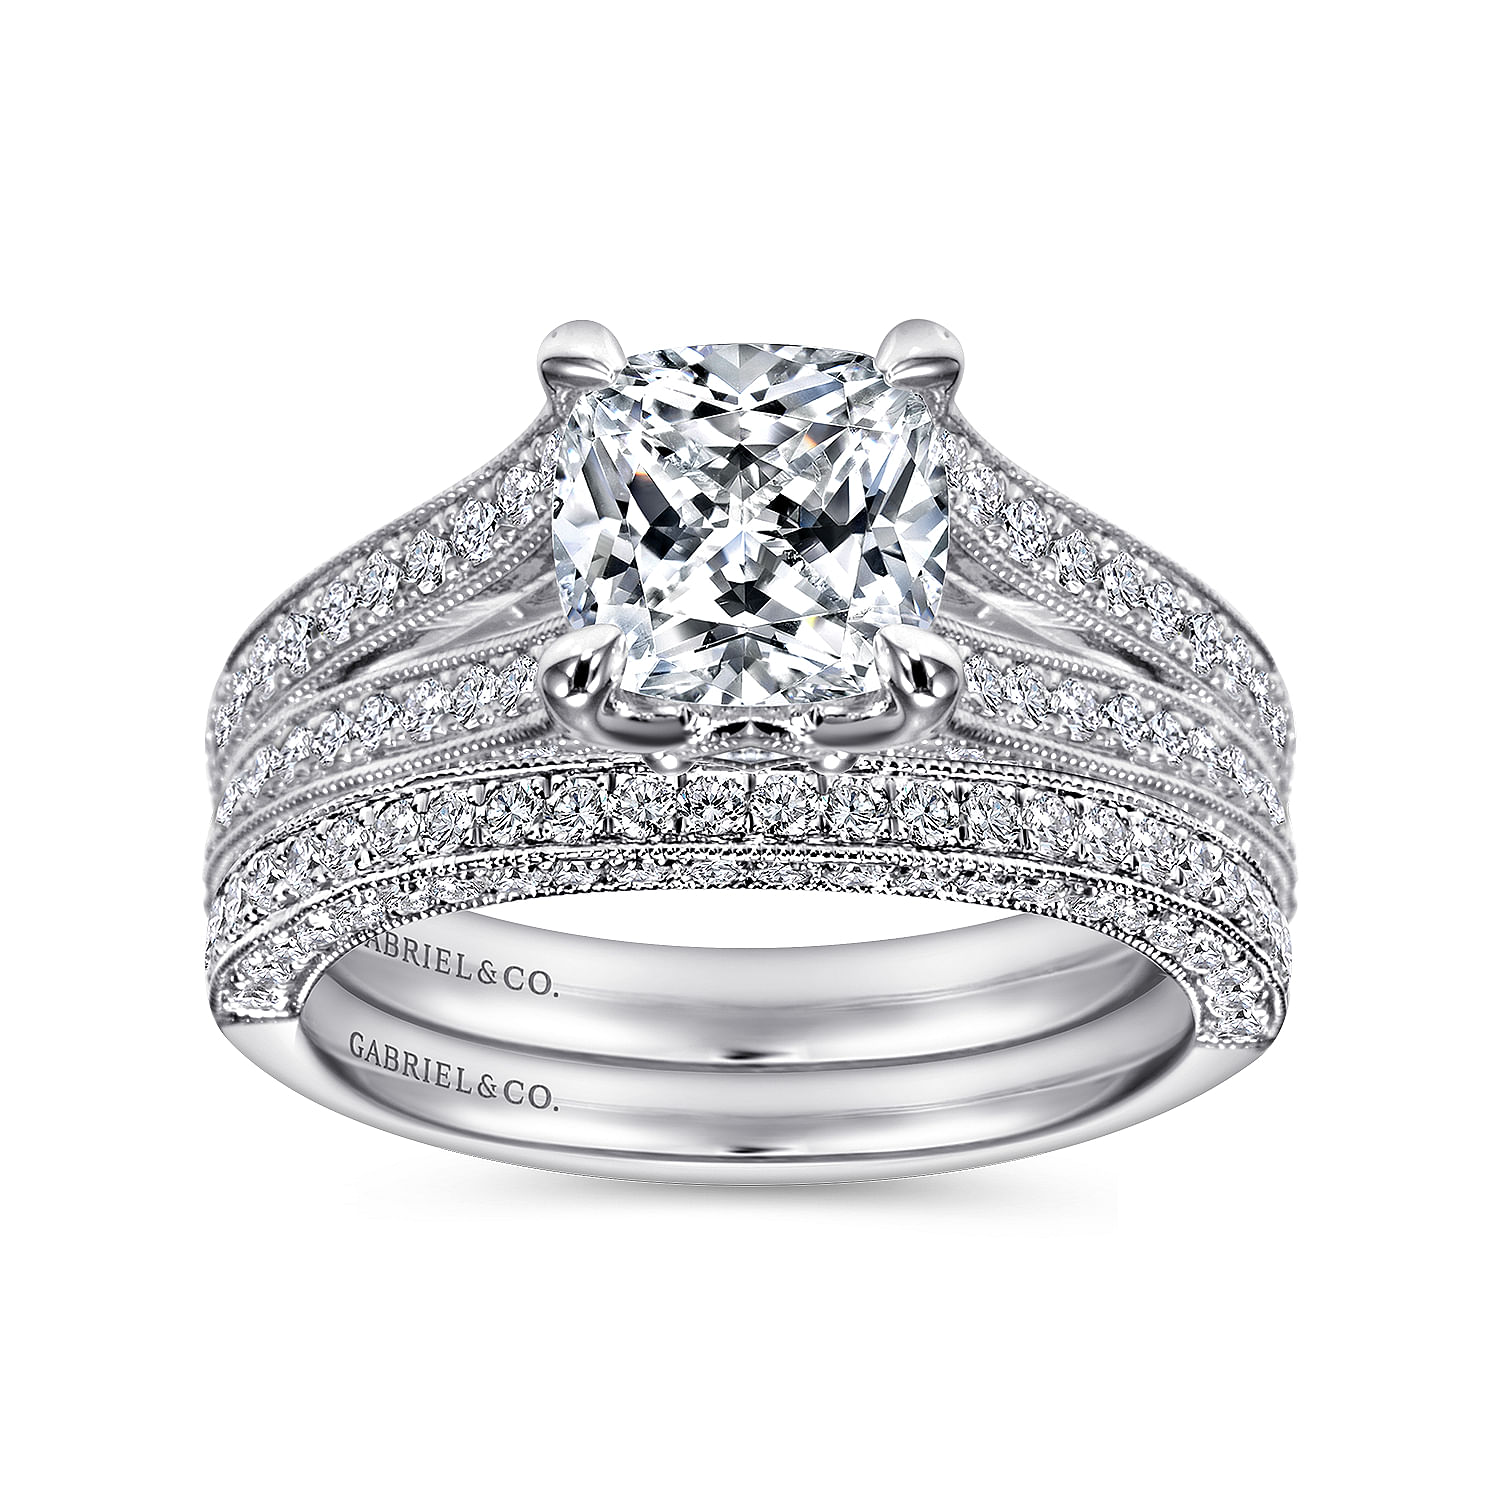 Vintage Inspired 14K White Gold Cushion Cut Split Shank Diamond Engagement Ring